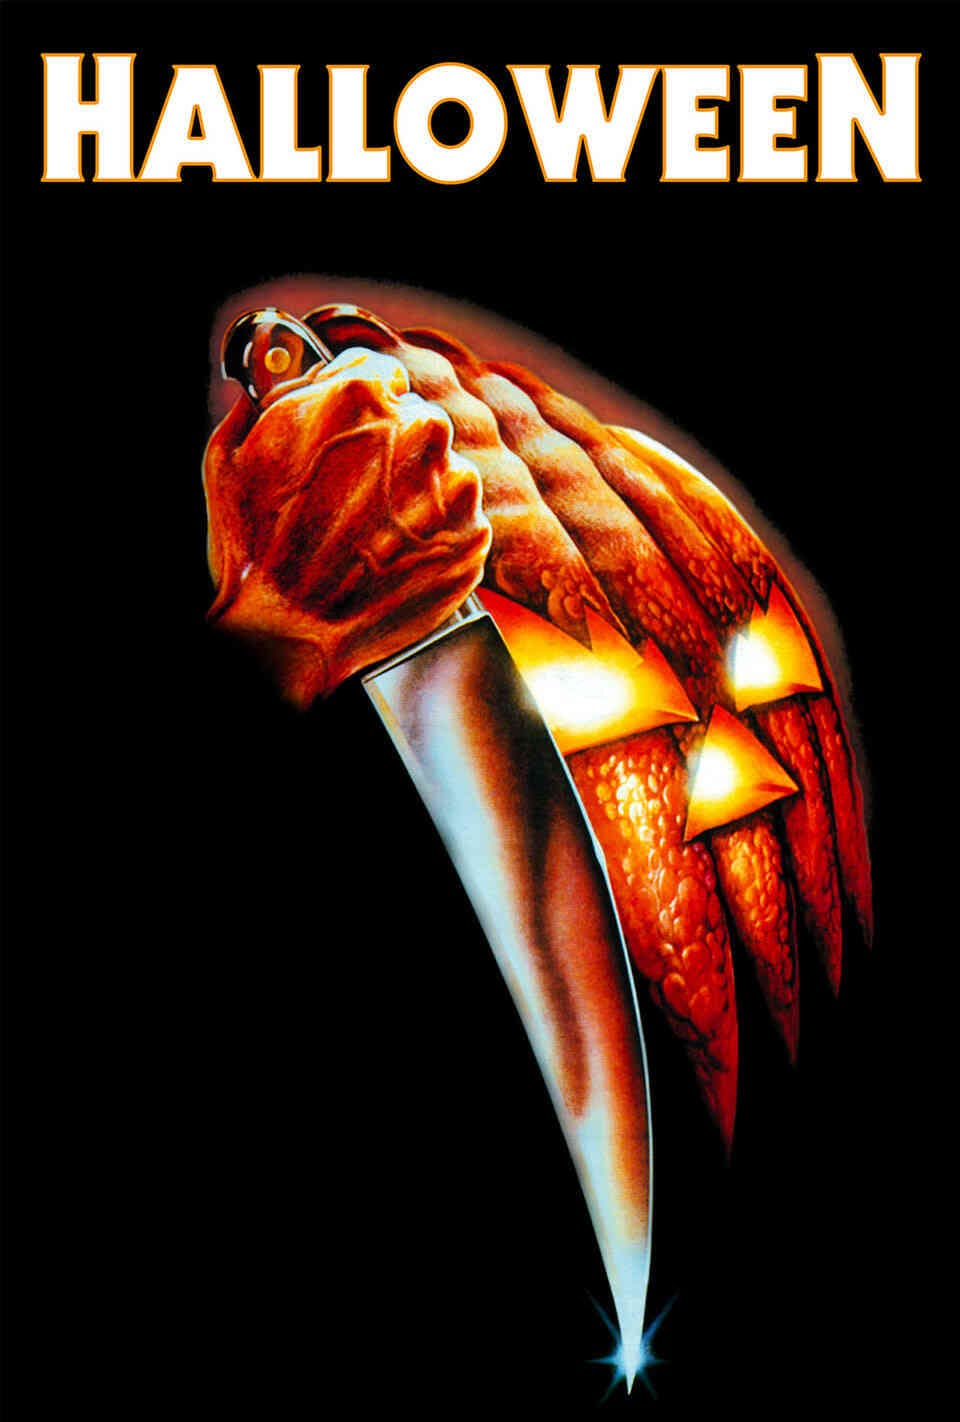 Read Halloween screenplay (poster)